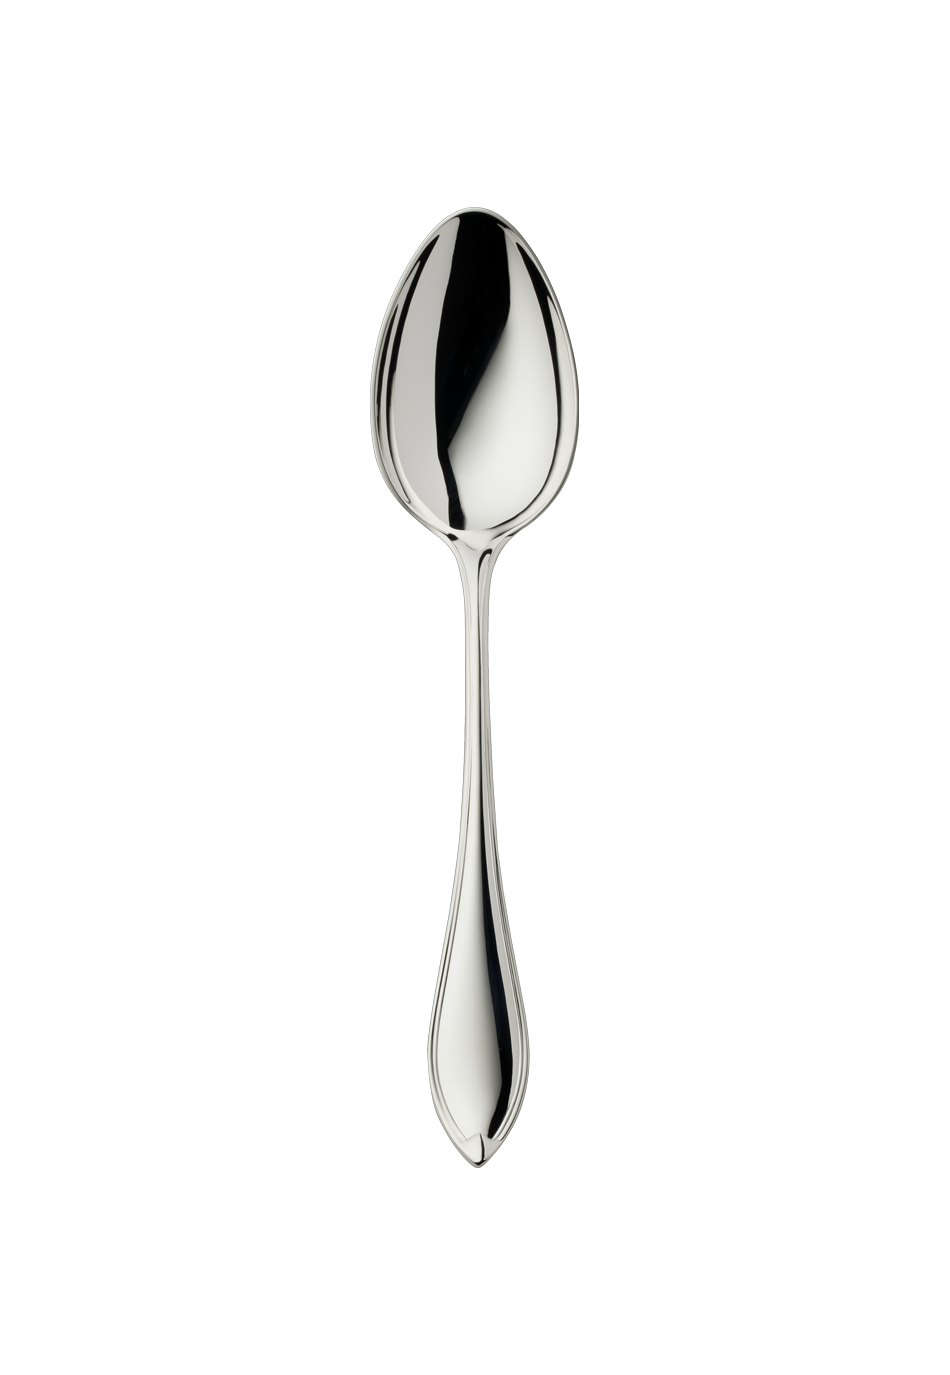 Navette Menu Spoon (150g massive silverplated)